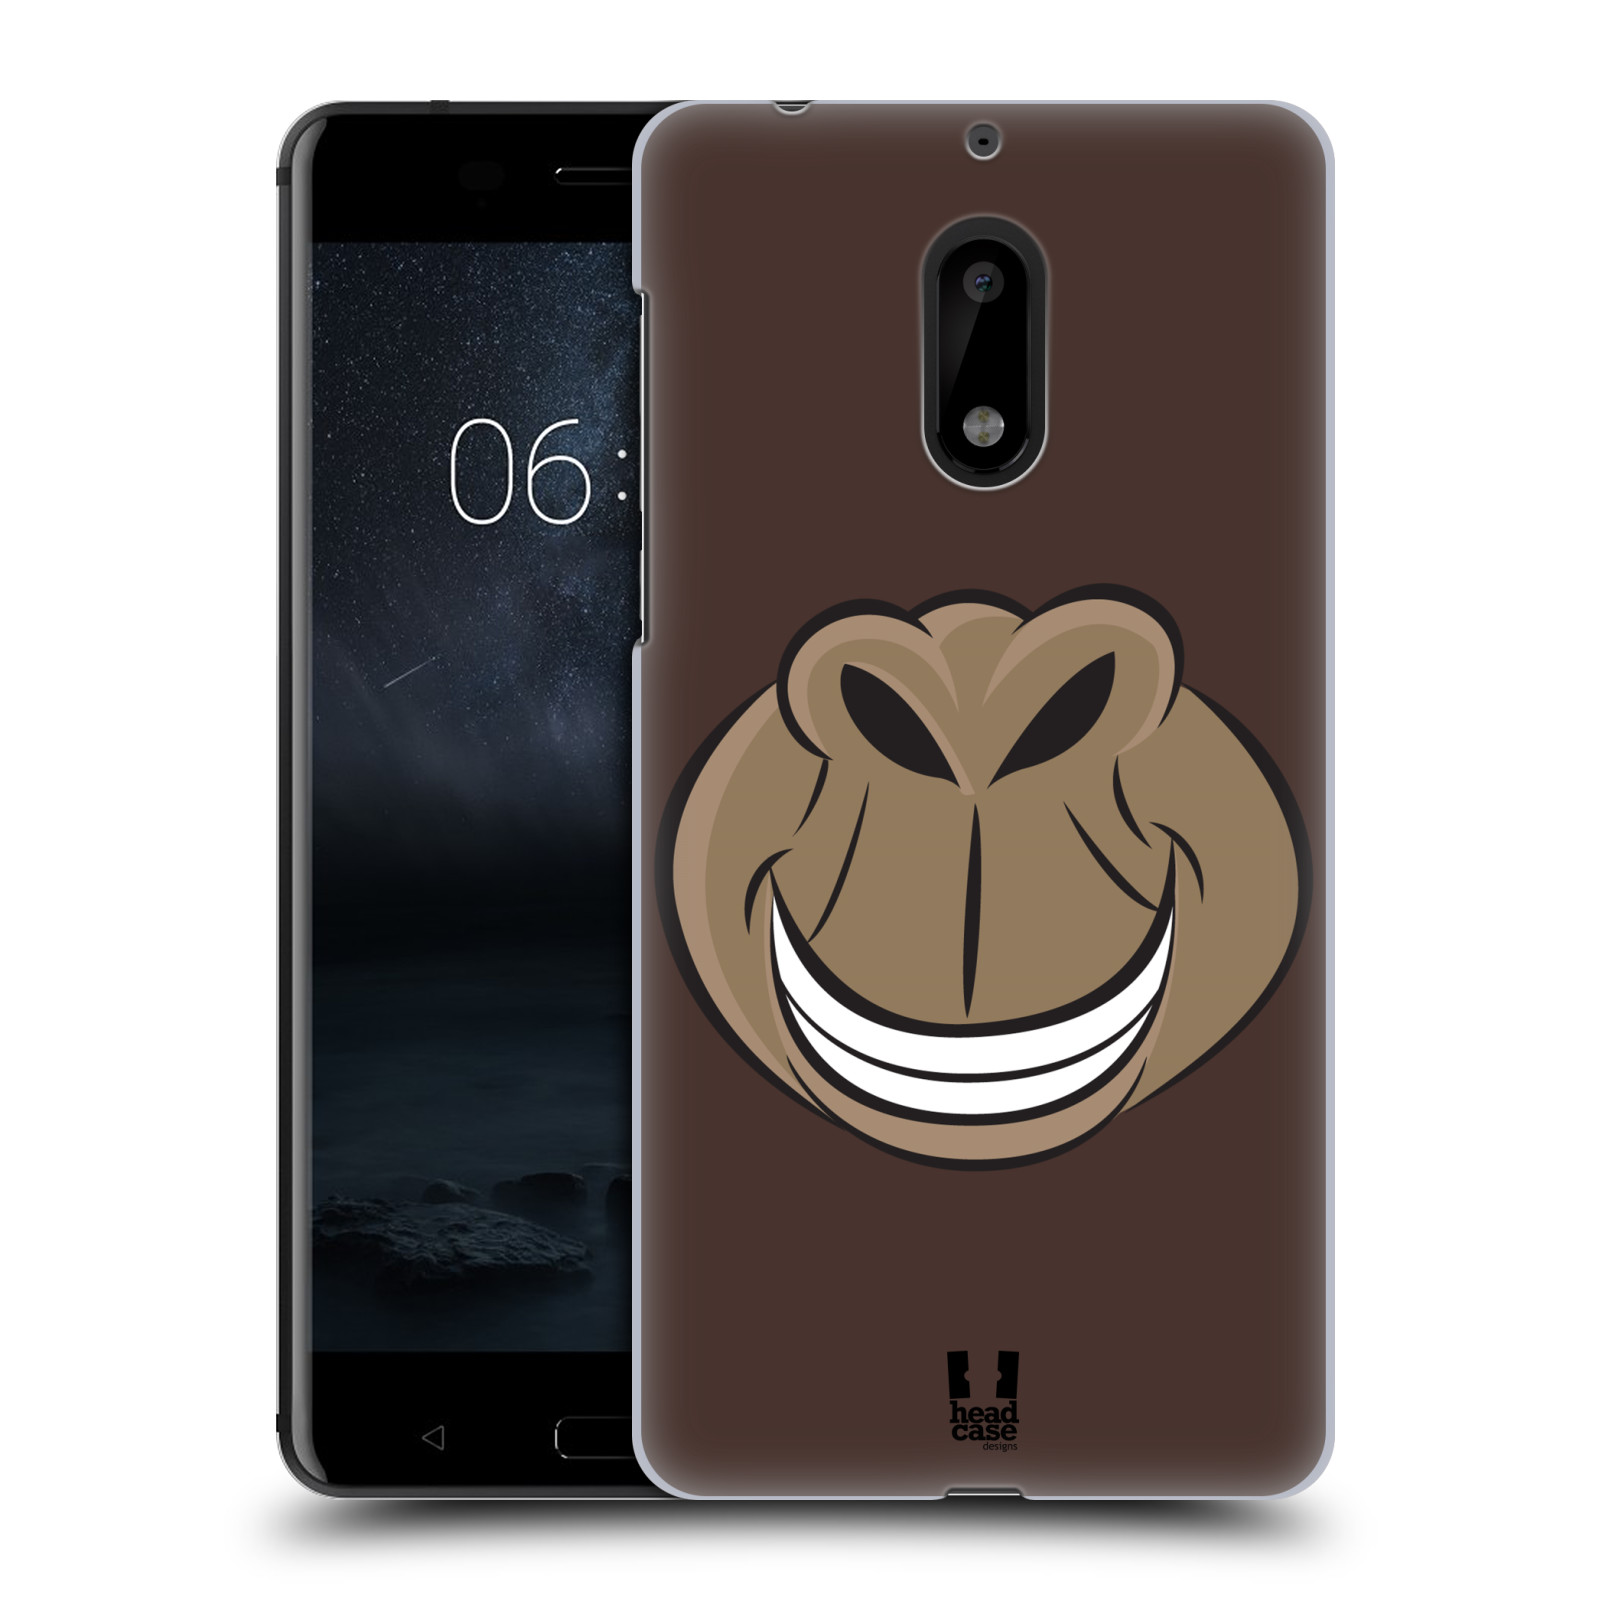 HEAD CASE plastový obal na mobil Nokia 6 vzor Zvířecí úsměv opice hnědá